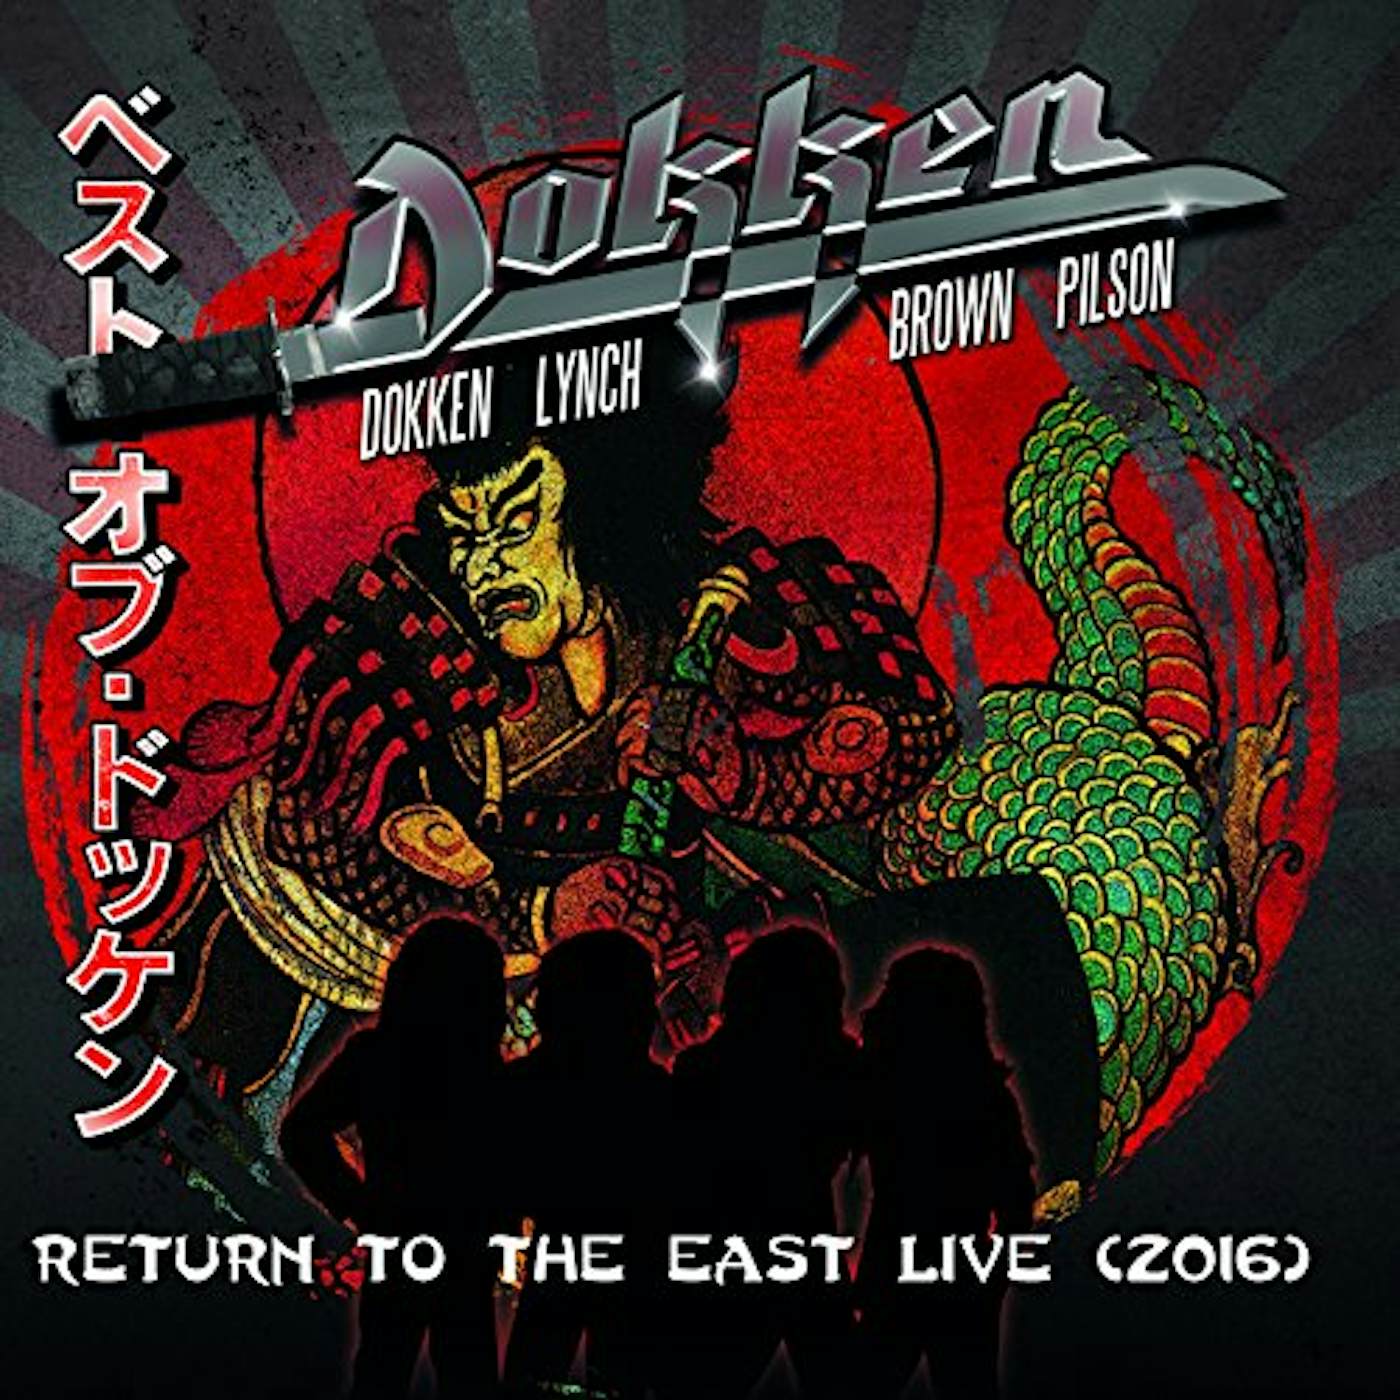 Dokken Return to the East Live 2016 Vinyl Record